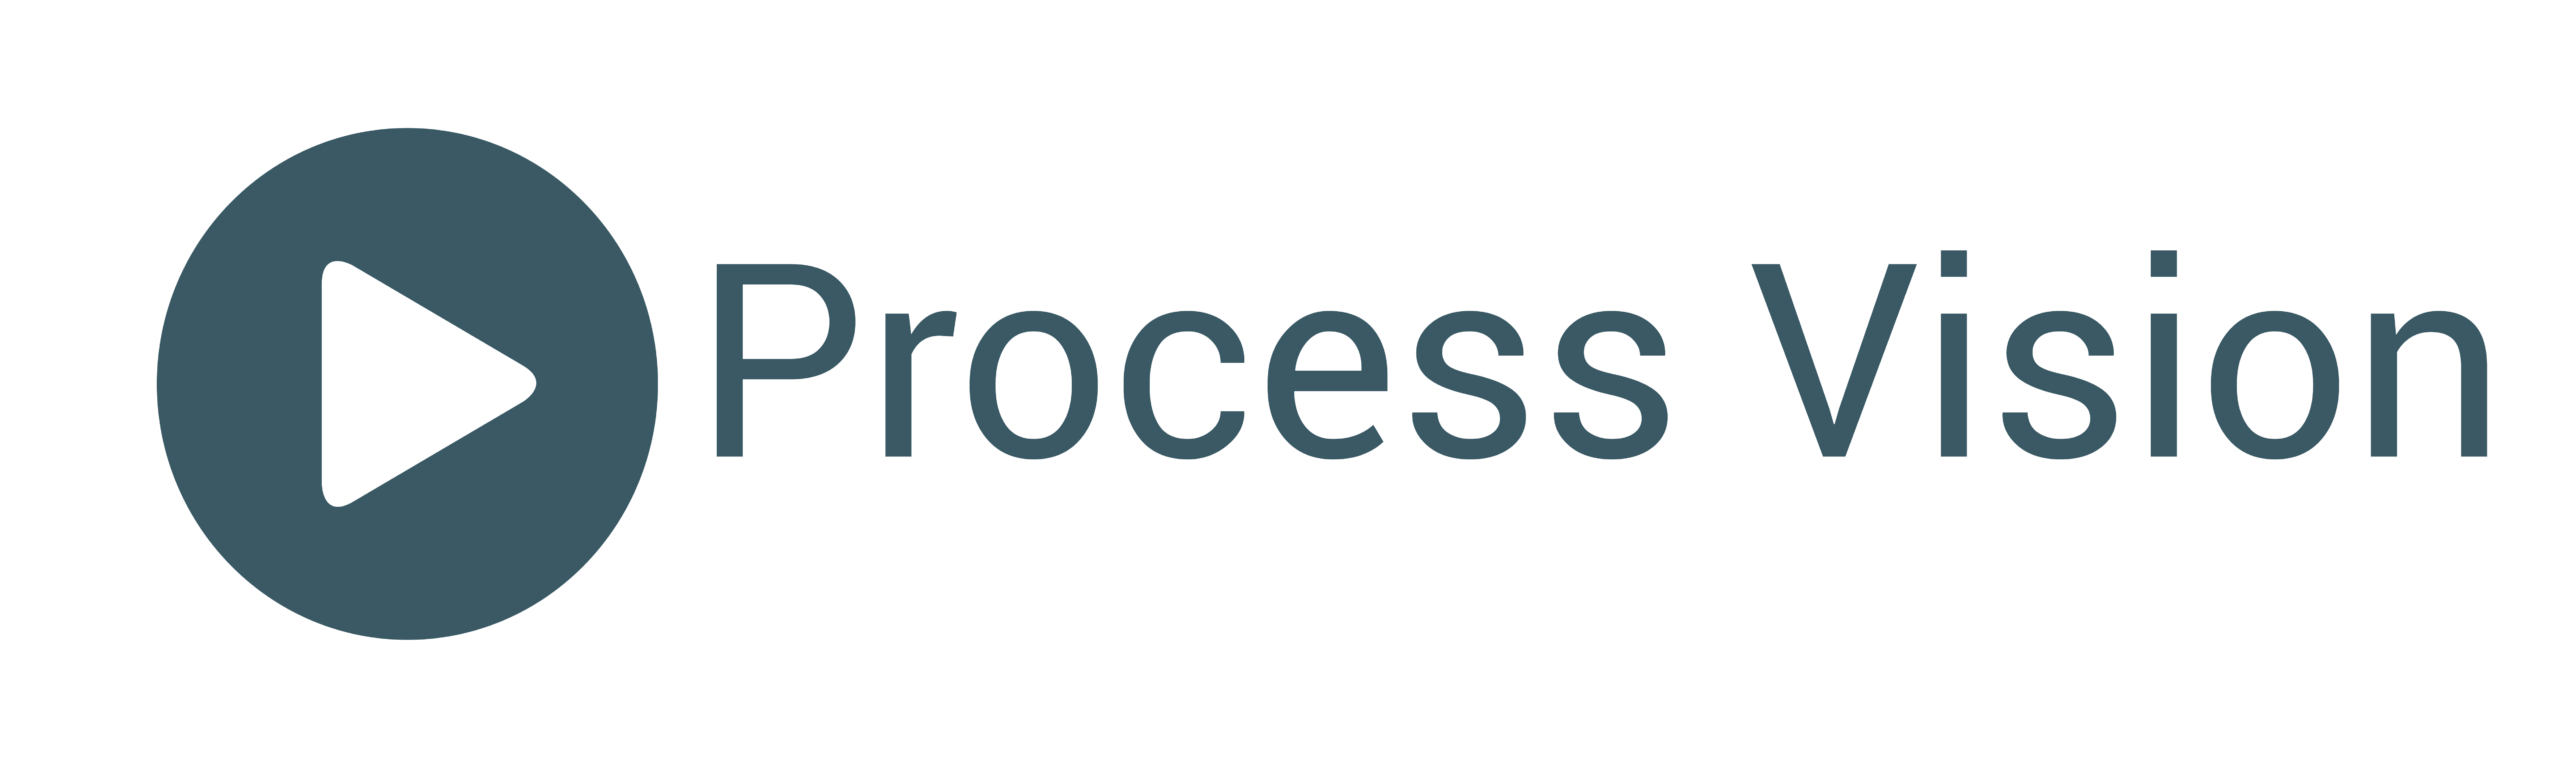 Process Vision